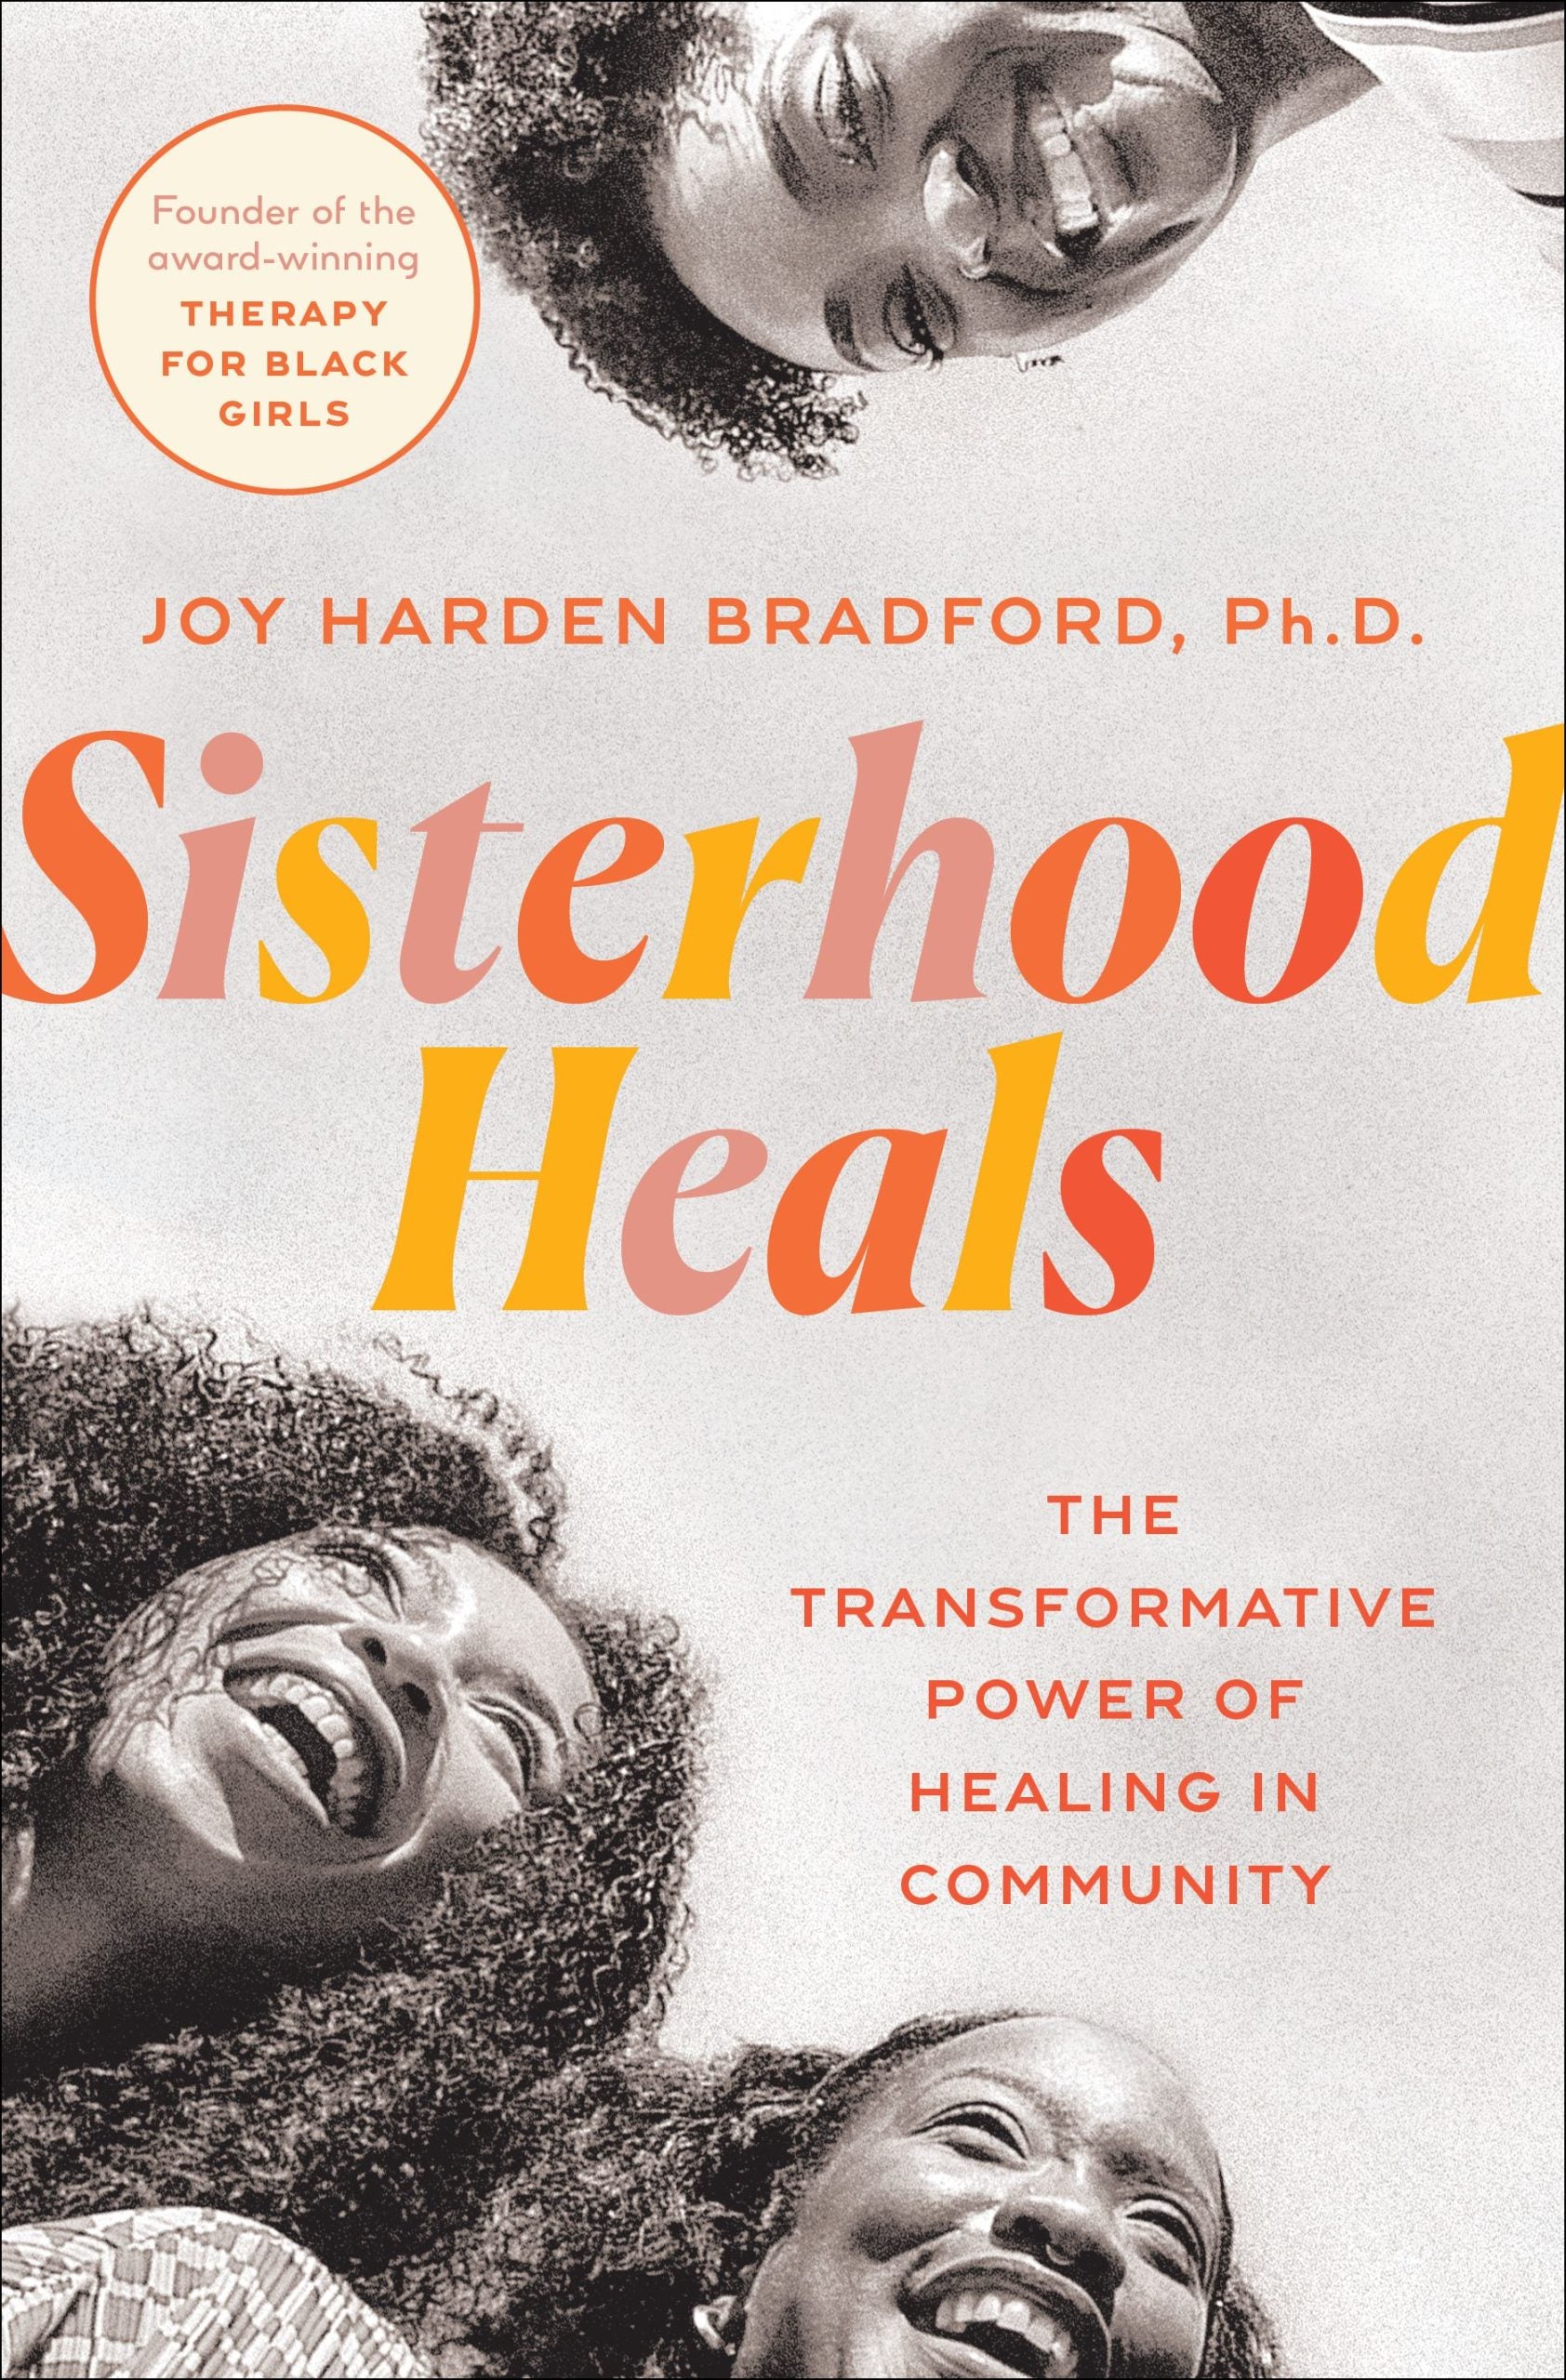 Dr. Joy Harden Bradford’s ‘Sisterhood Heals’ Highlights The Transformative Power Of Healing In Community